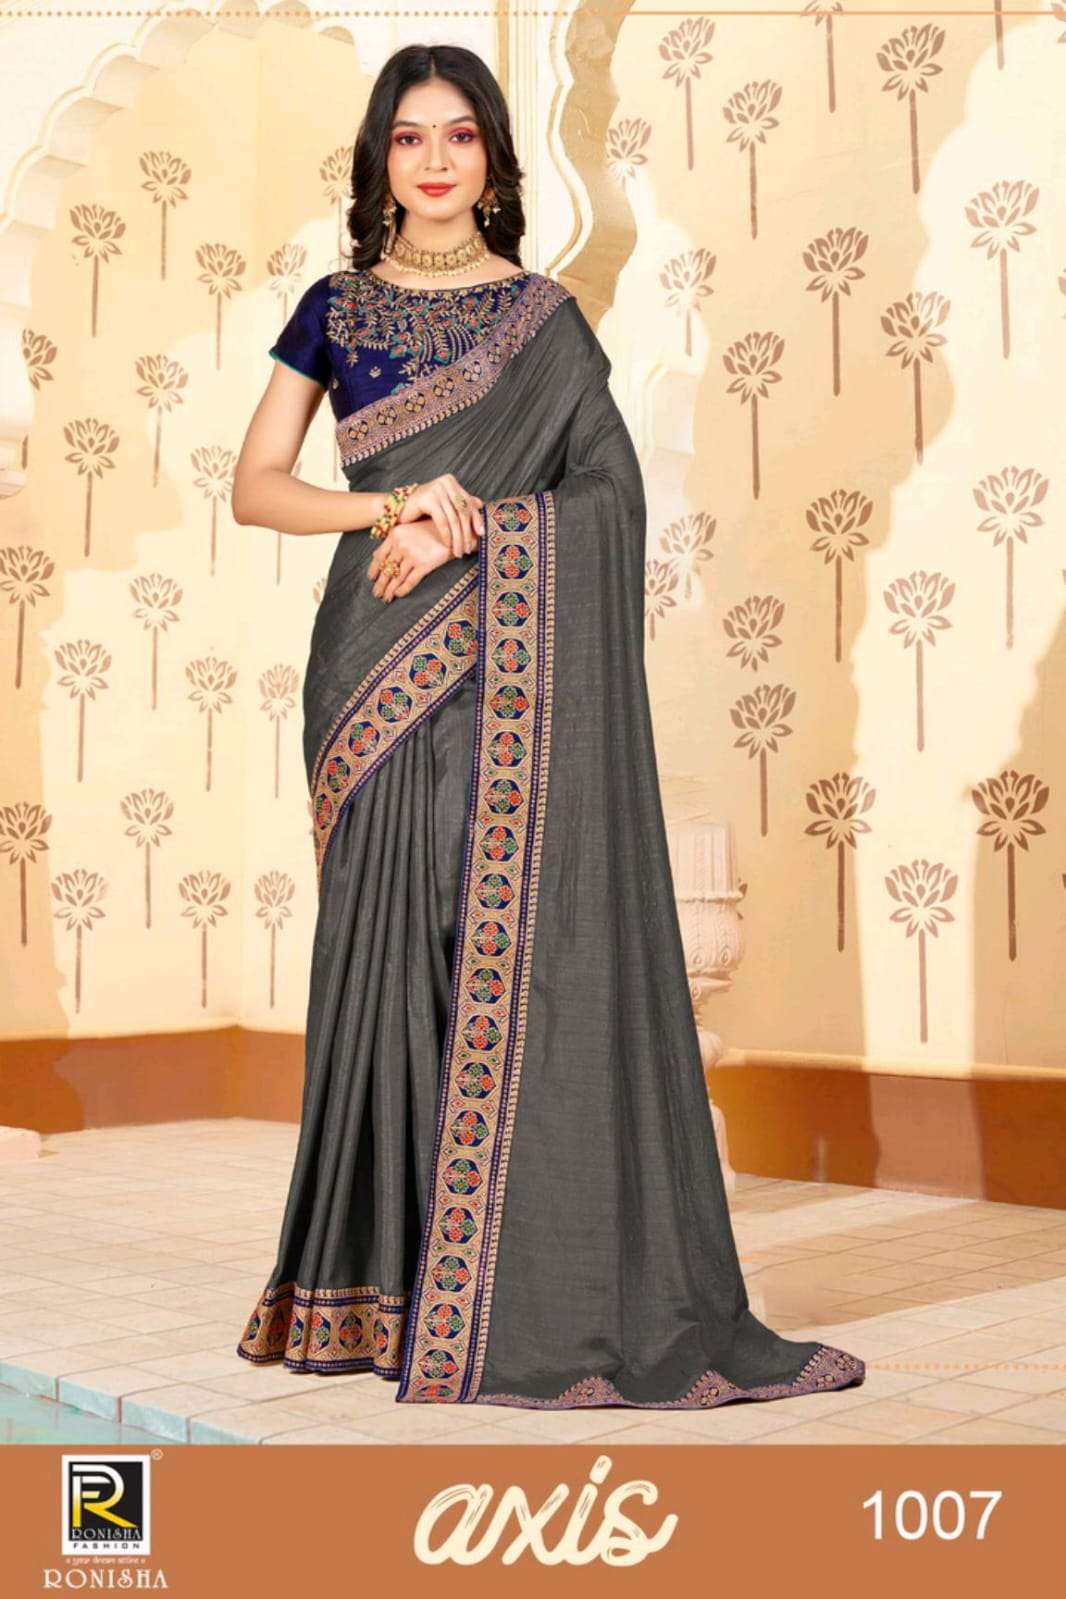 Ronisha Present Axis Kumari Silk Fancy Border Work Blouse Daily Wear Saree On Wholesale